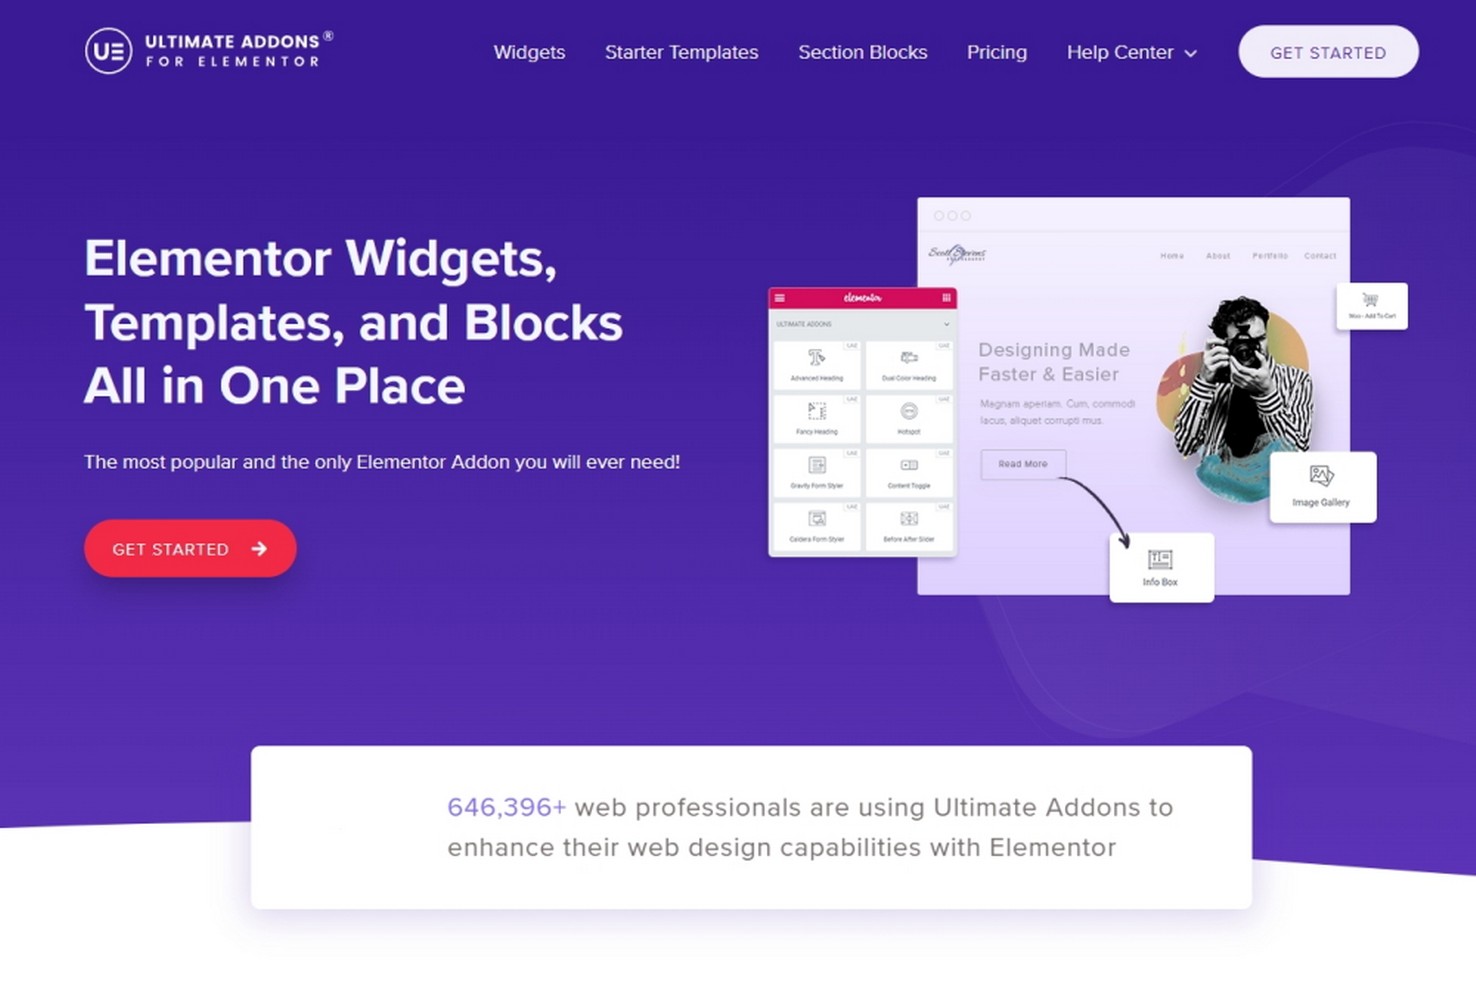 Elementor website